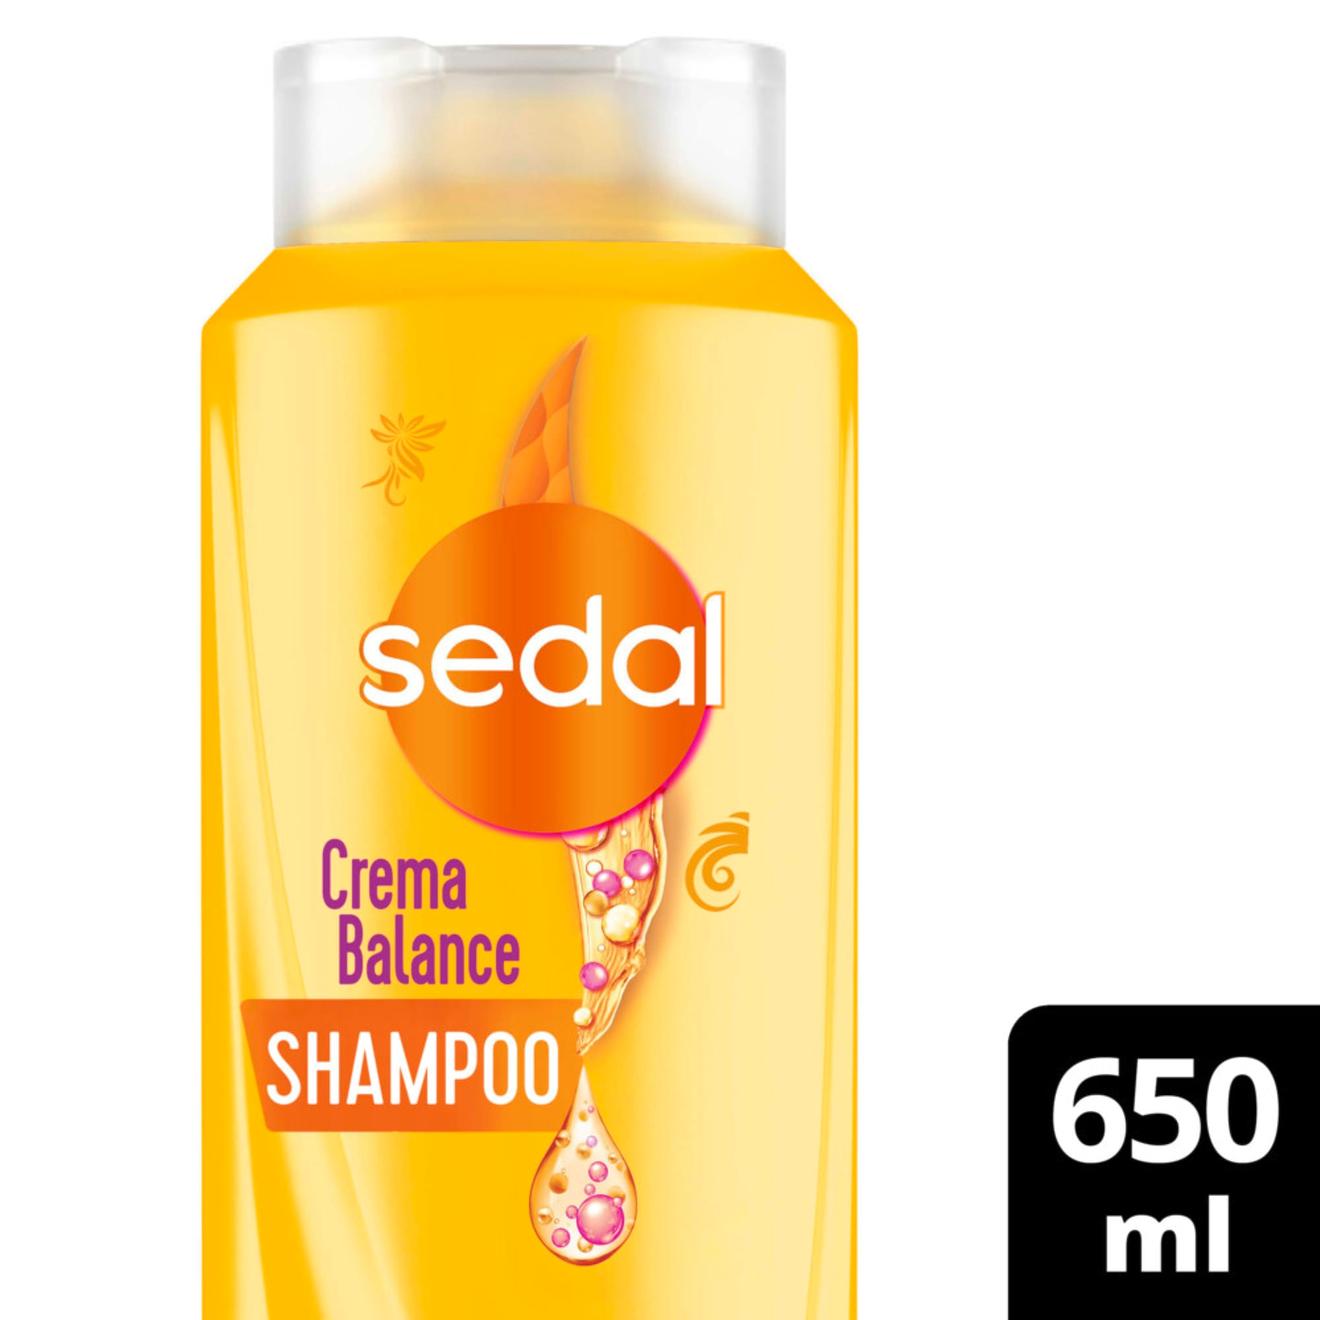 Oferta de Shampoo Seda crema balance 650 cc. por $2154,75 en Carrefour